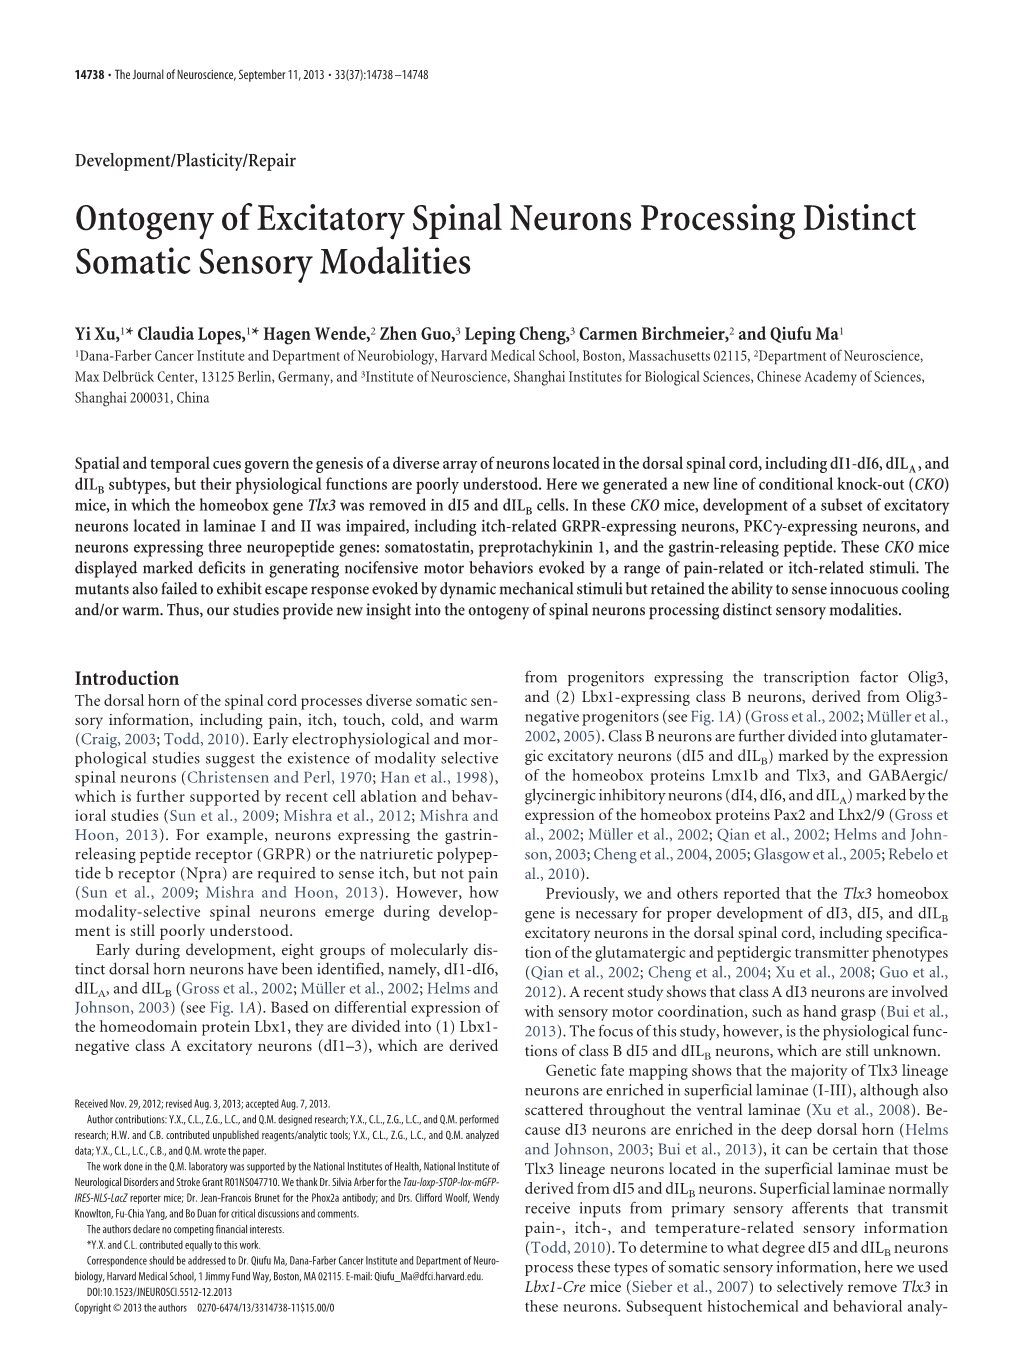 Ontogeny of Excitatory Spinal Neurons Processing Distinct Somatic Sensory Modalities